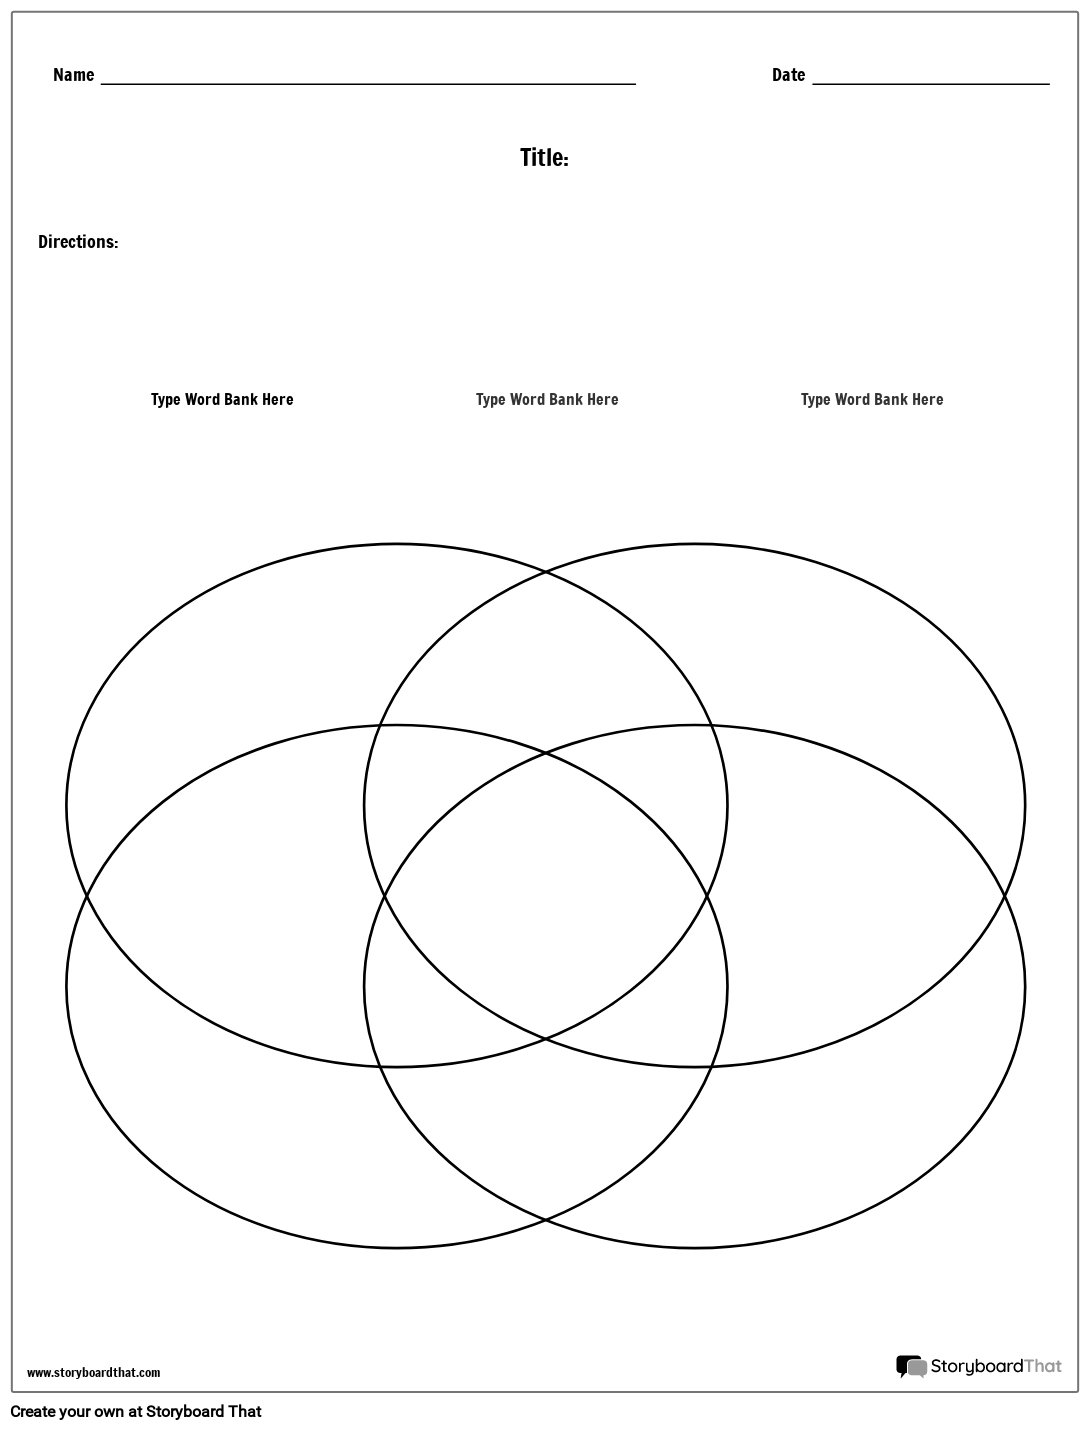 venn diagram 4 storyboard by worksheet templates